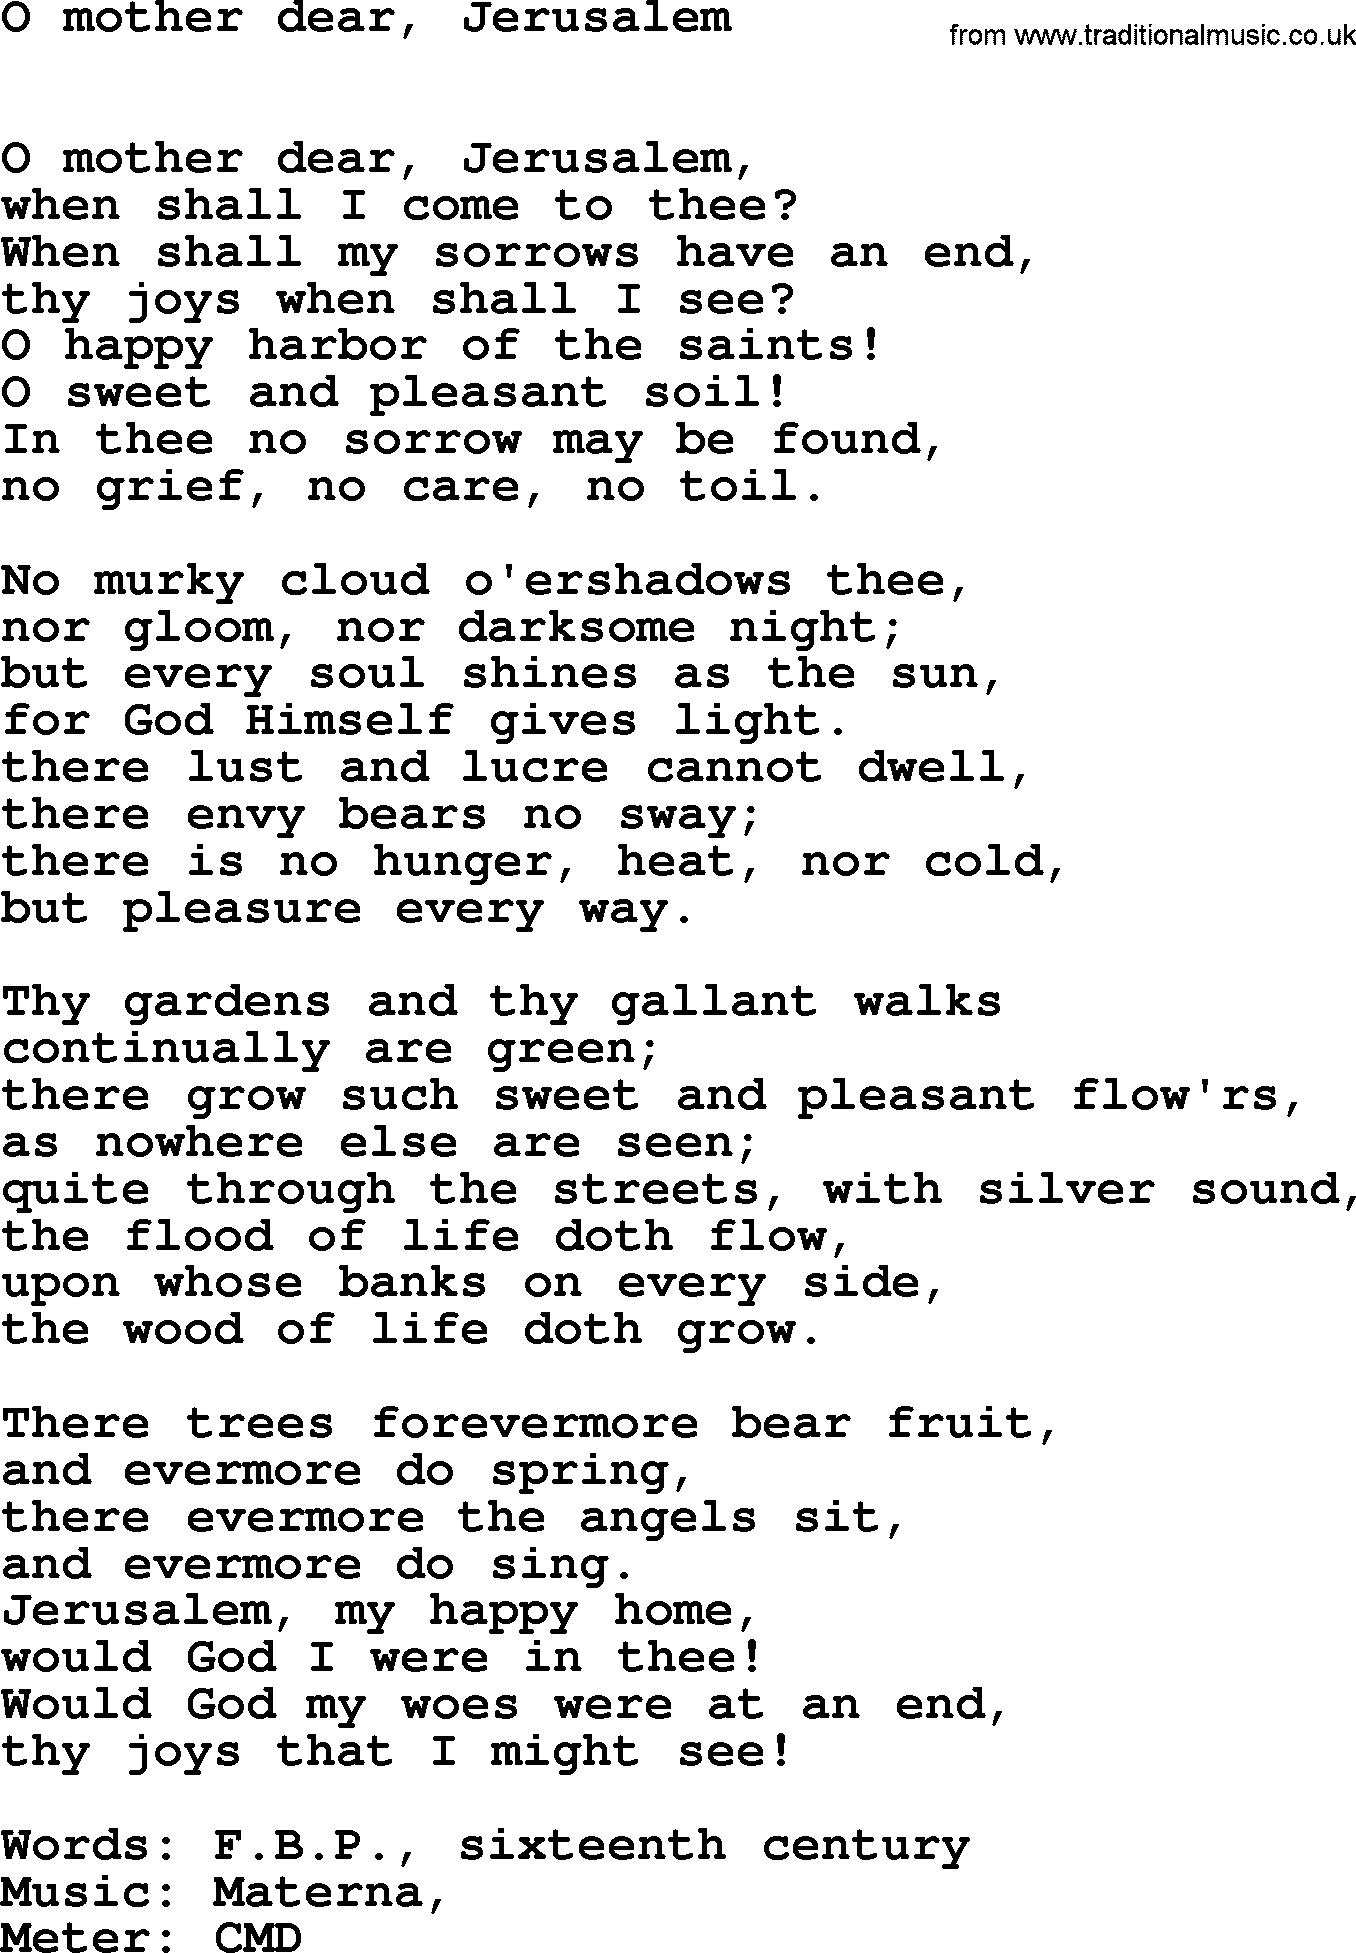 Book of Common Praise Hymn: O Mother Dear, Jerusalem.txt lyrics with midi music